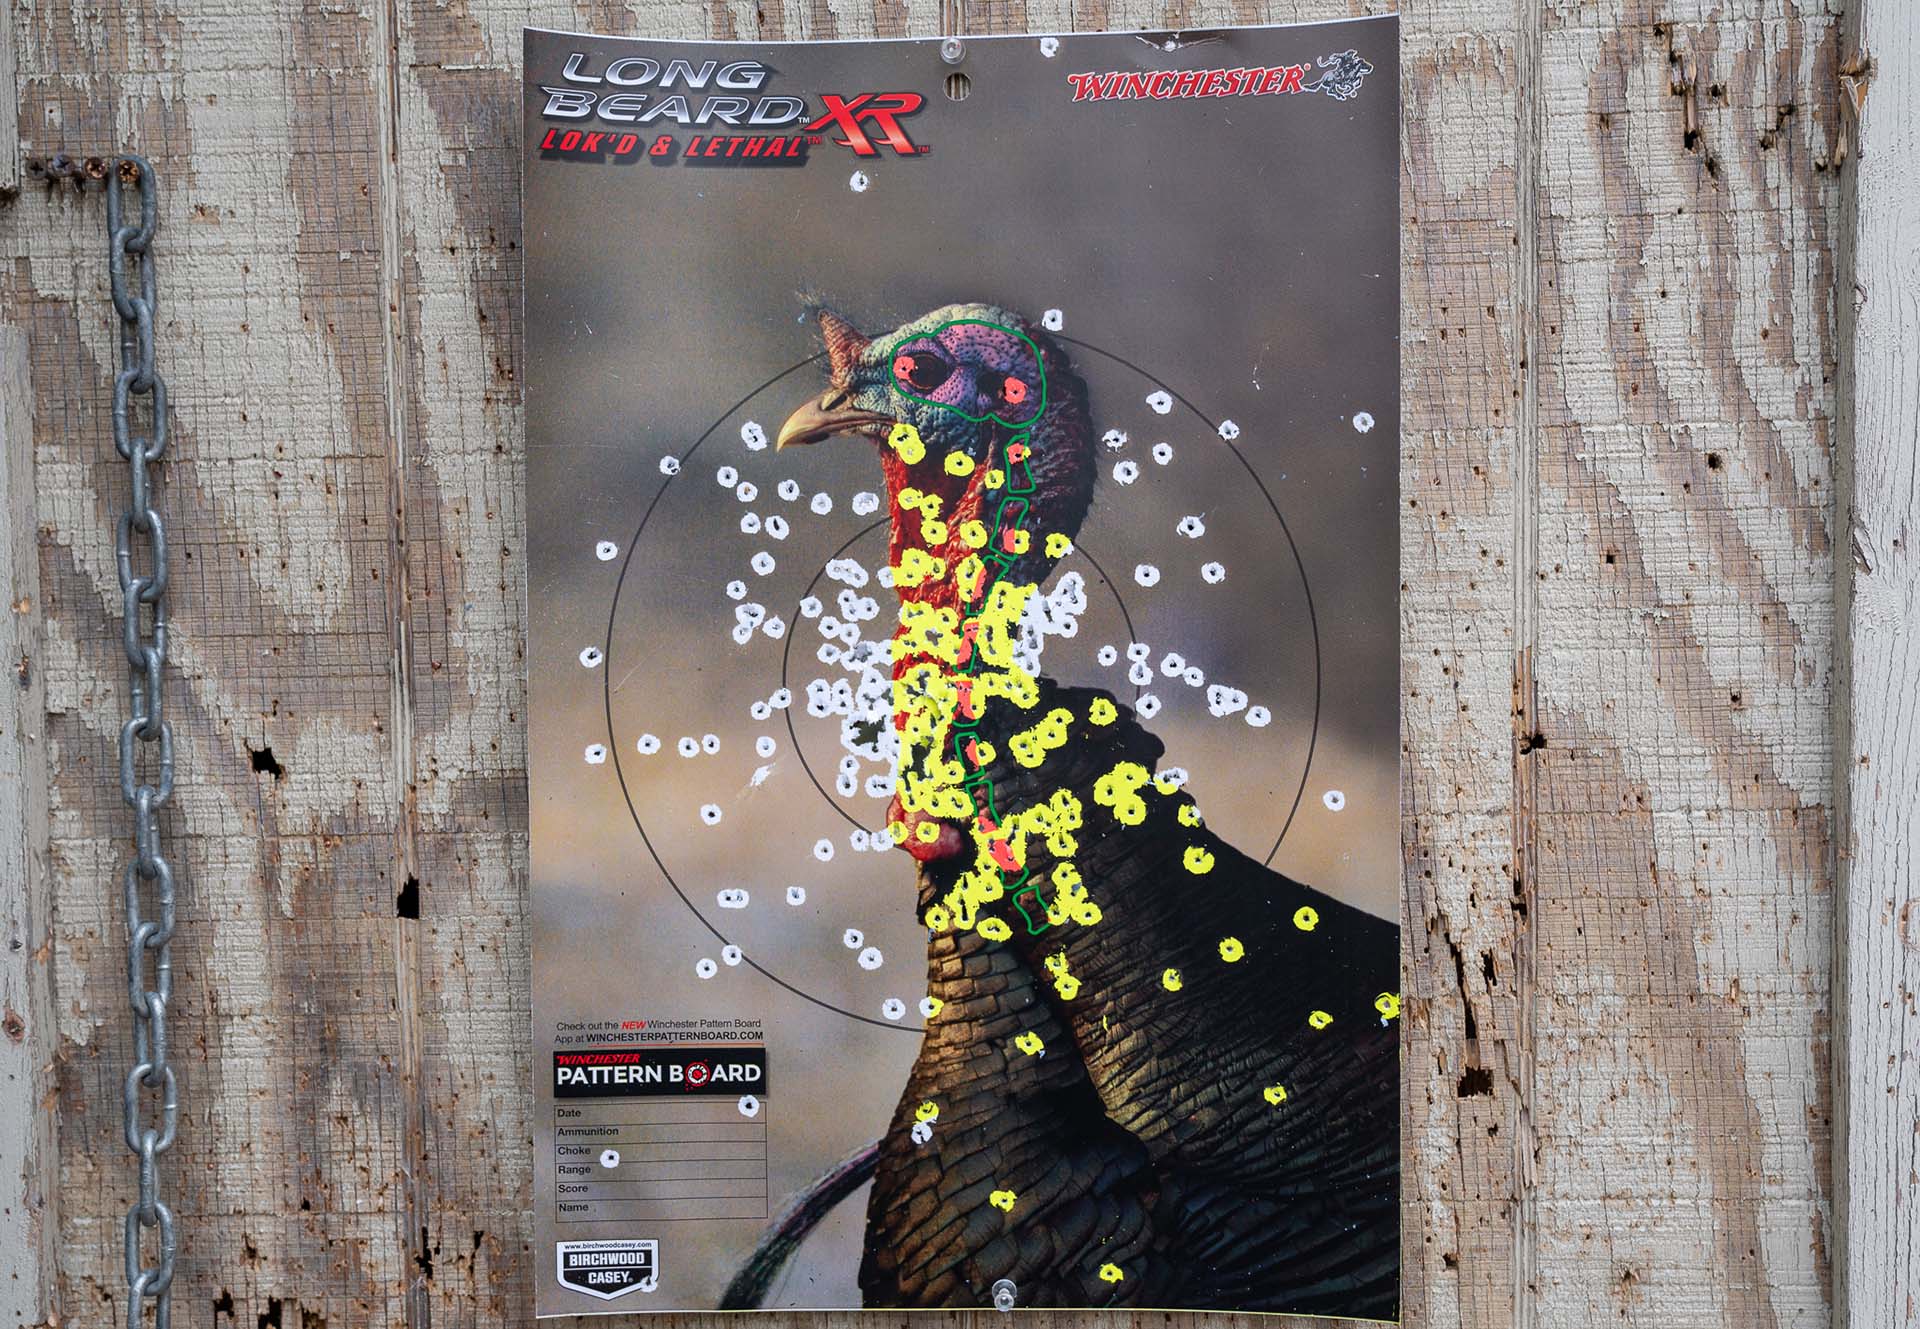 Practice target of turkey shot full of bullet holes